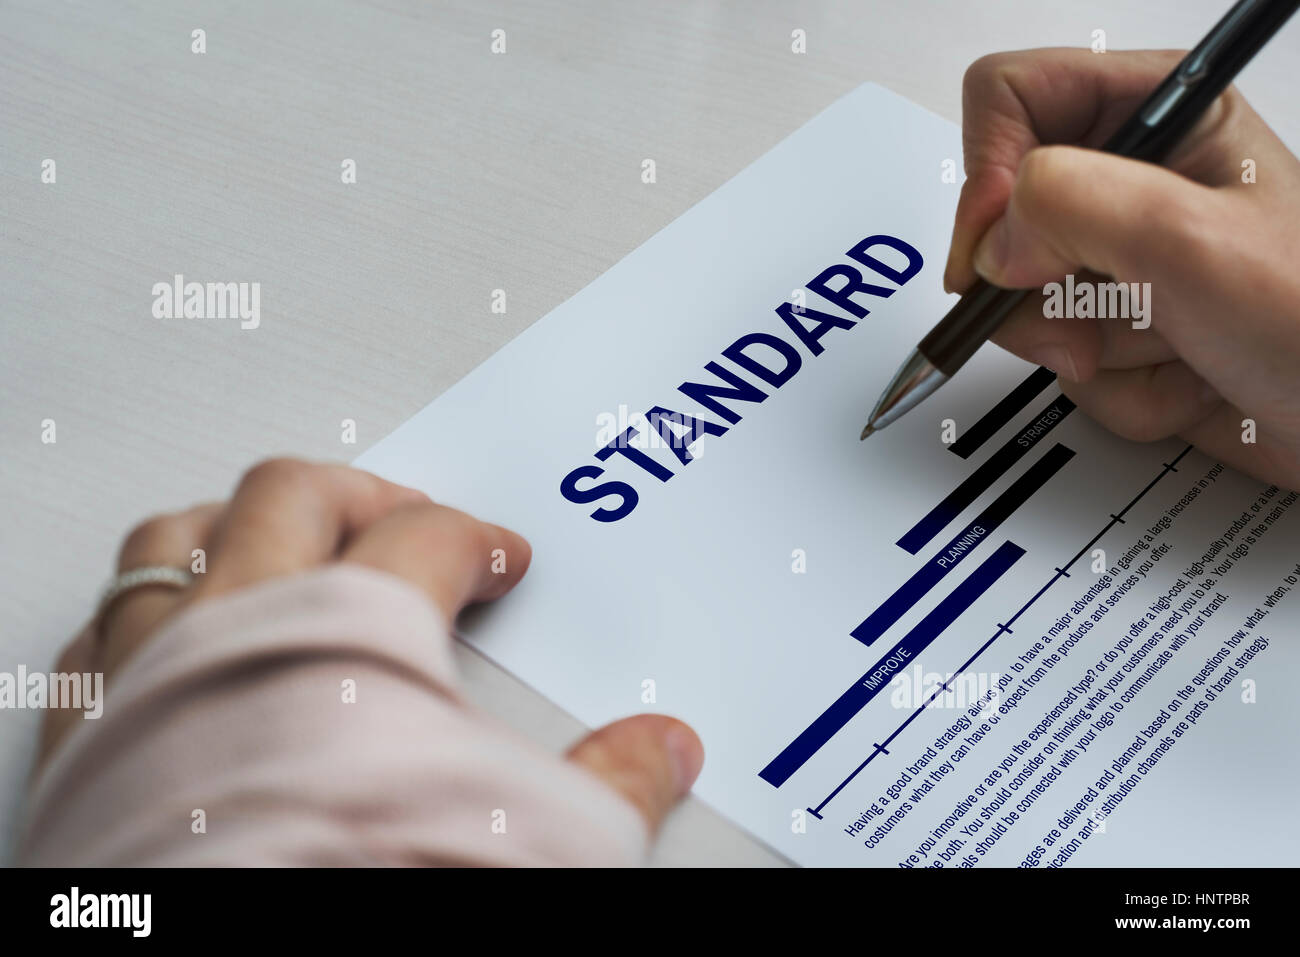 Assurance Guarantee Standard Quality Concept Stock Photo